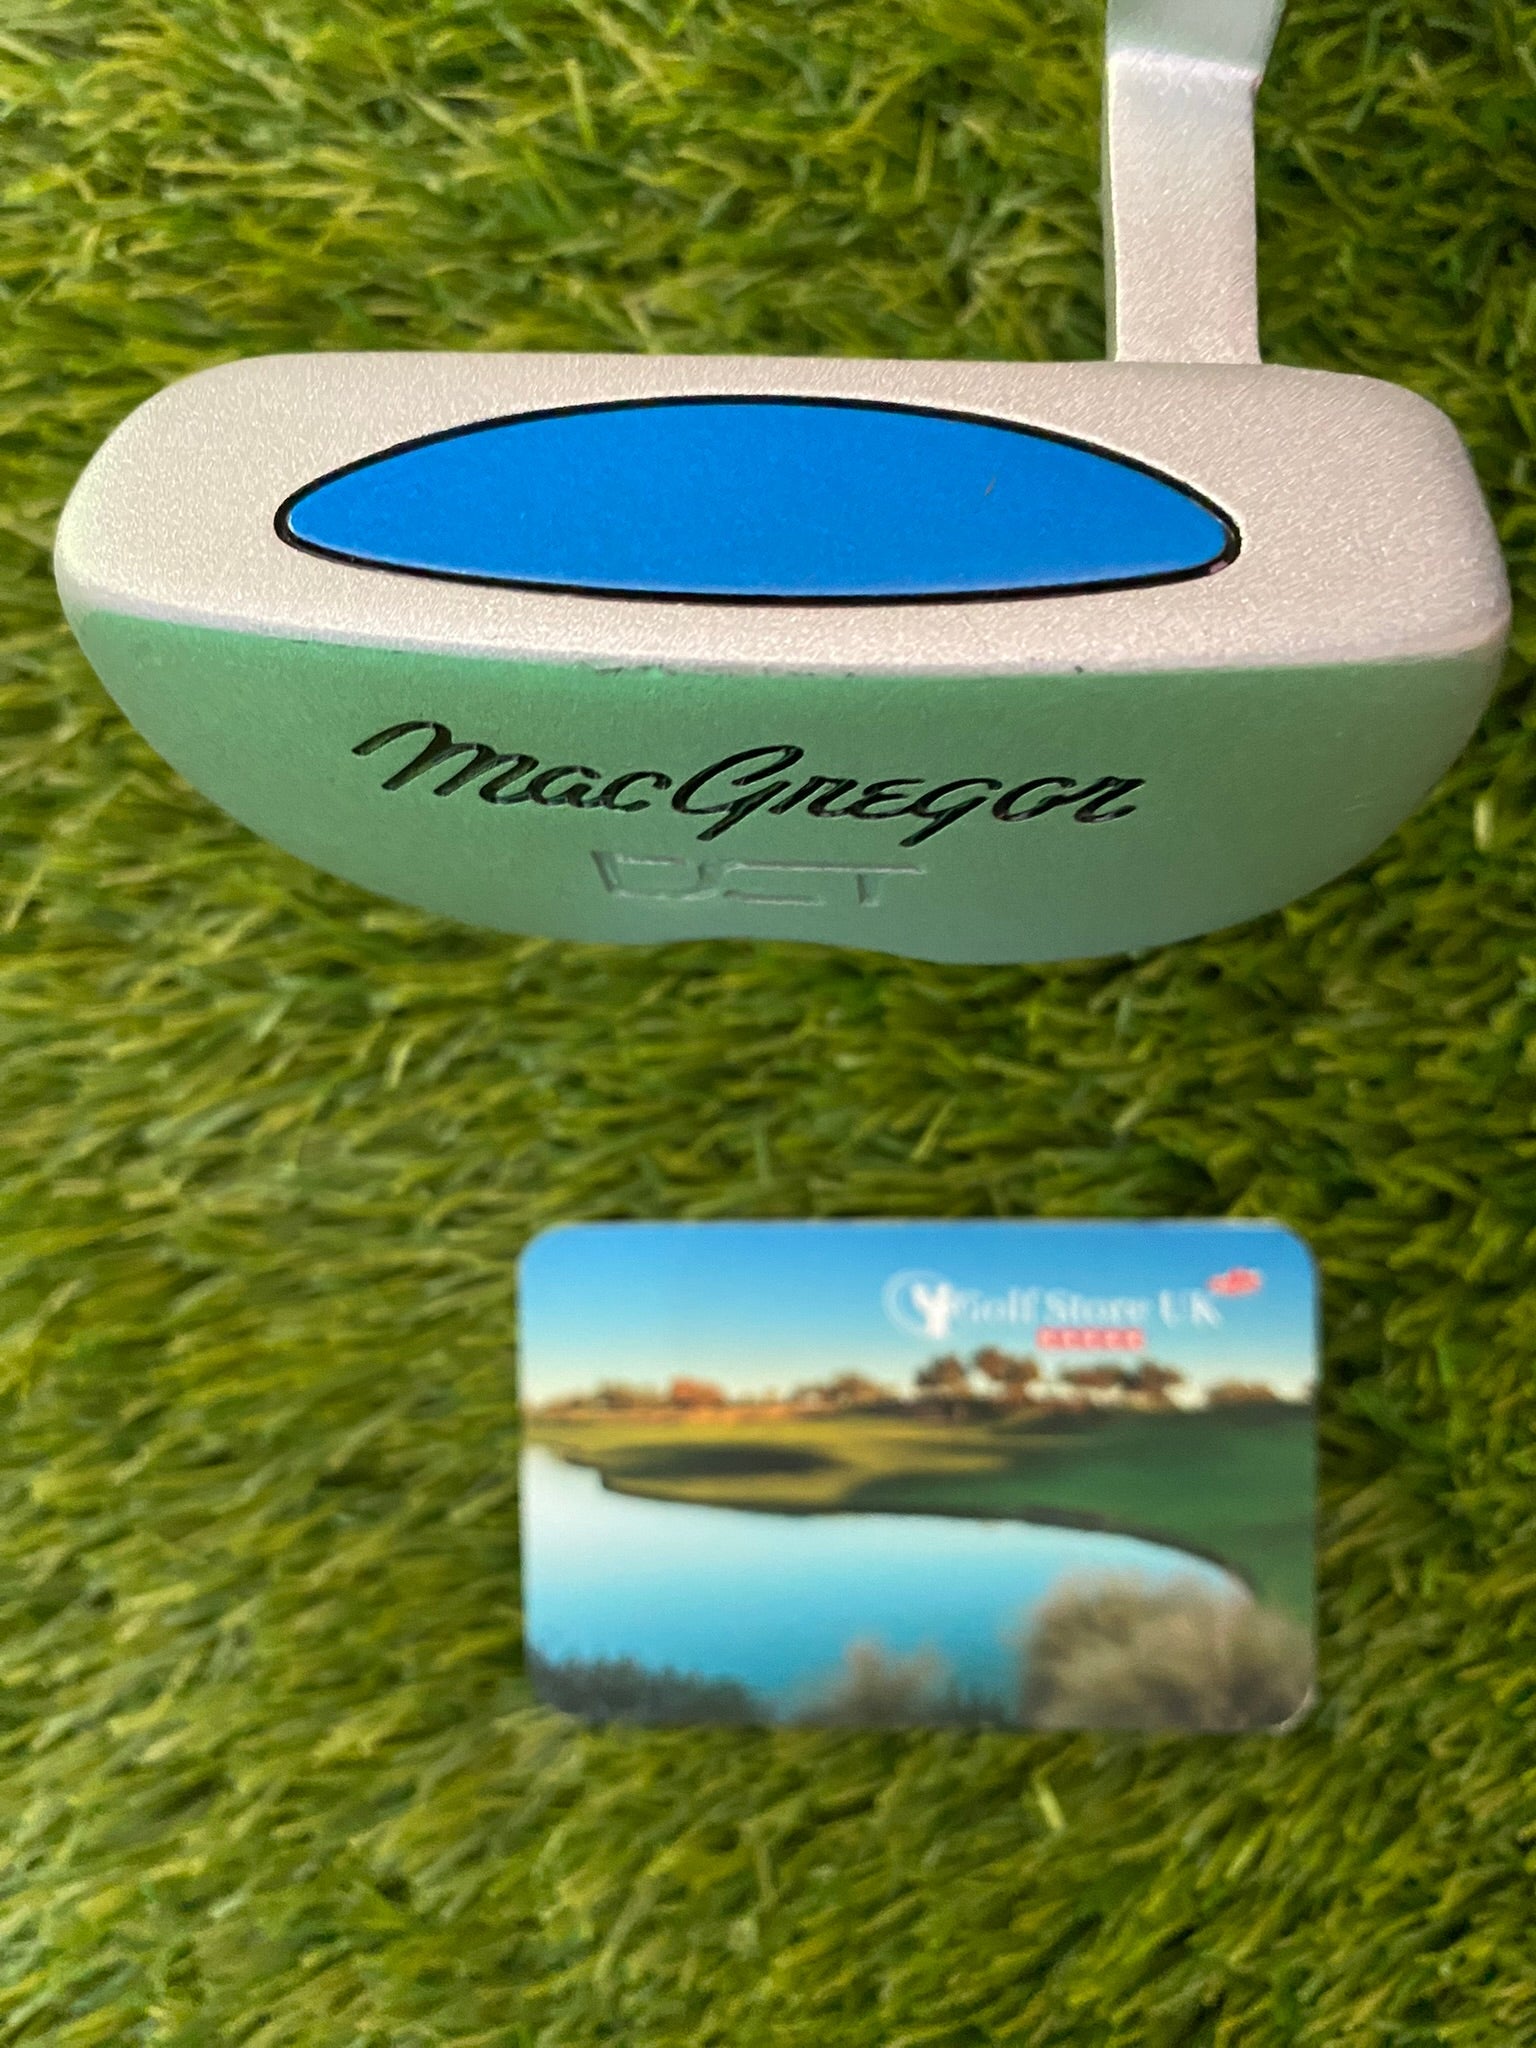 (Kids) MacGregor DCT Bag and Club Set, Stunning Set - Golf Store UK